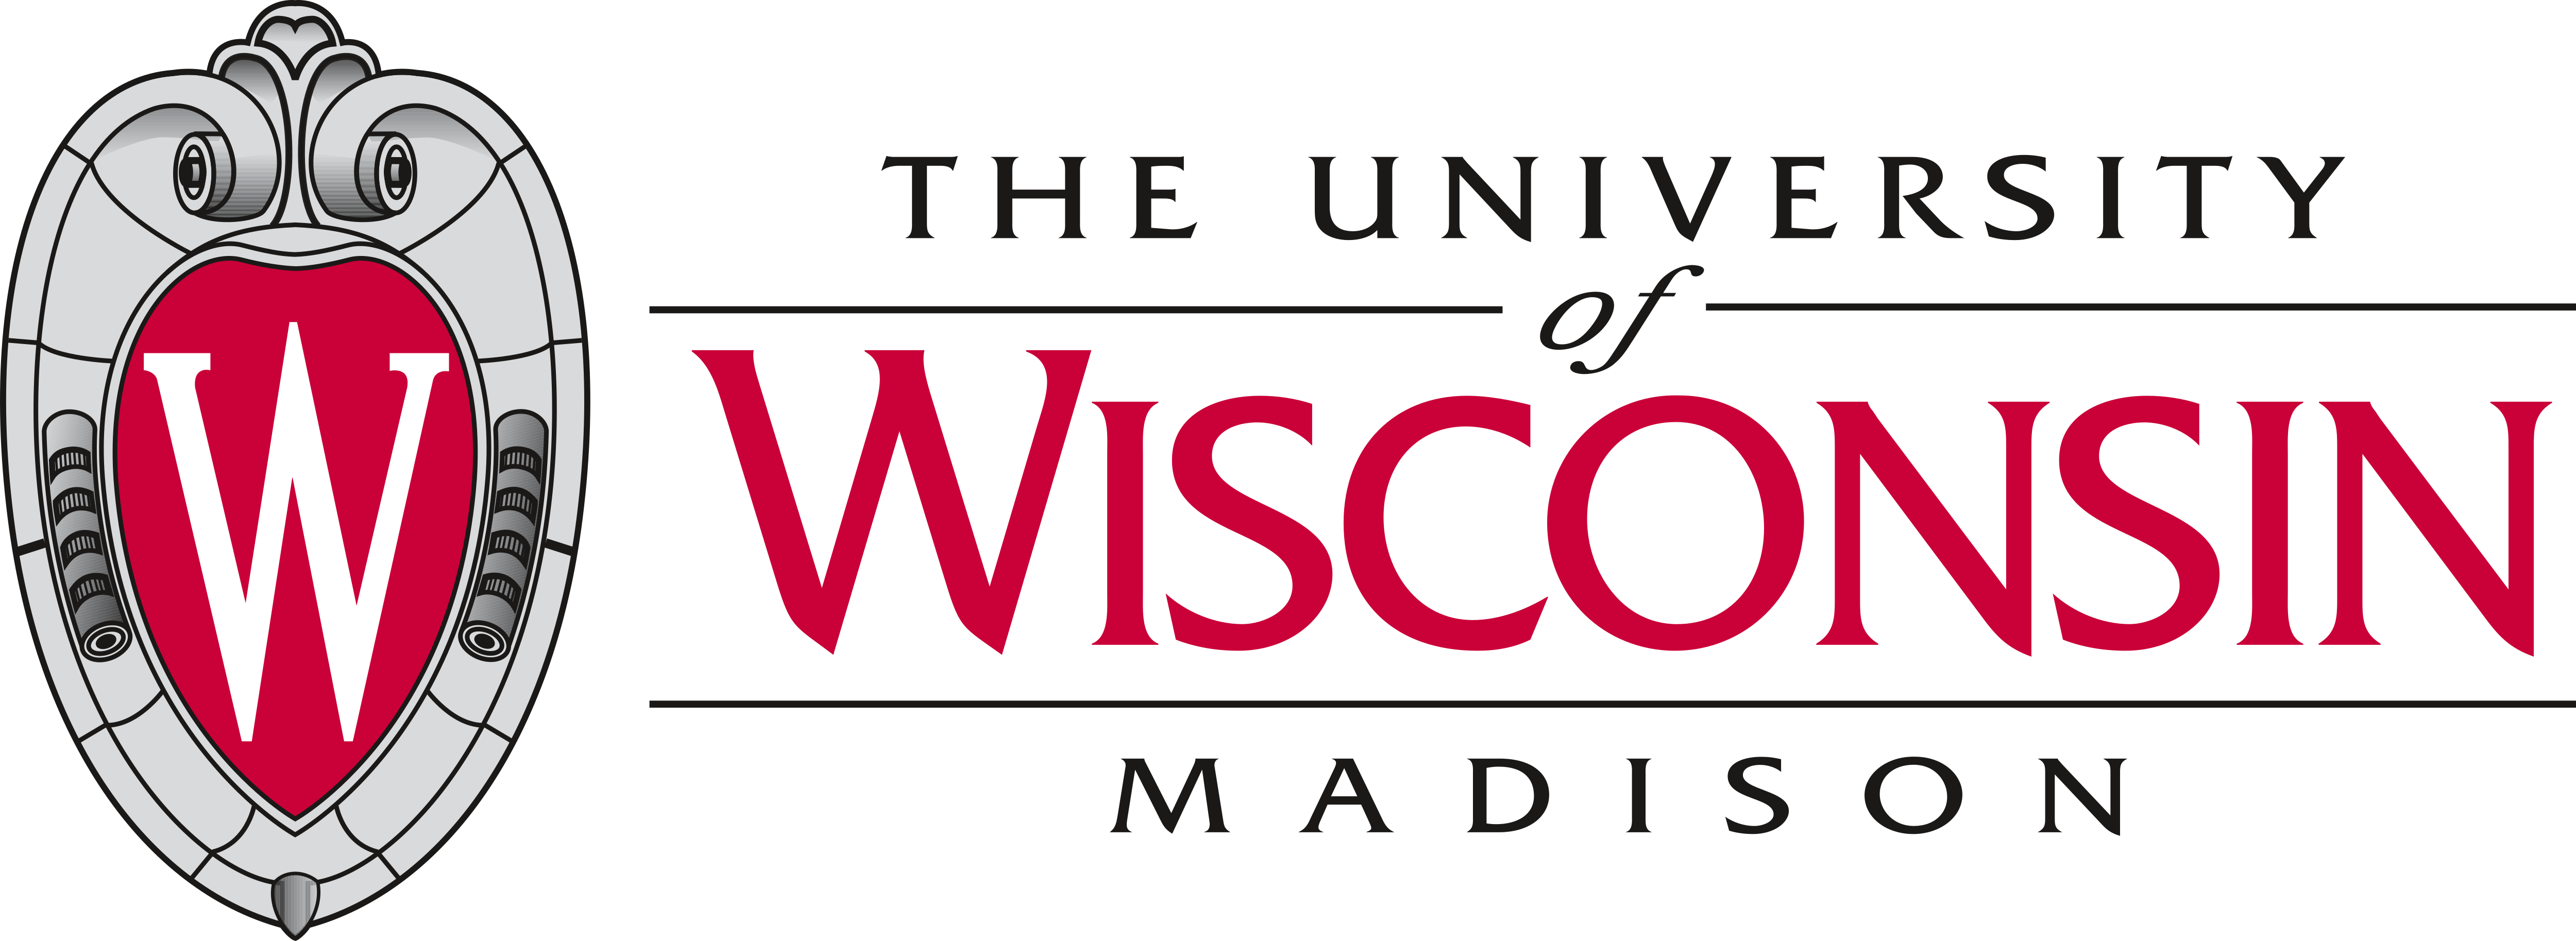 University of Wisconsin Madison Logos Download